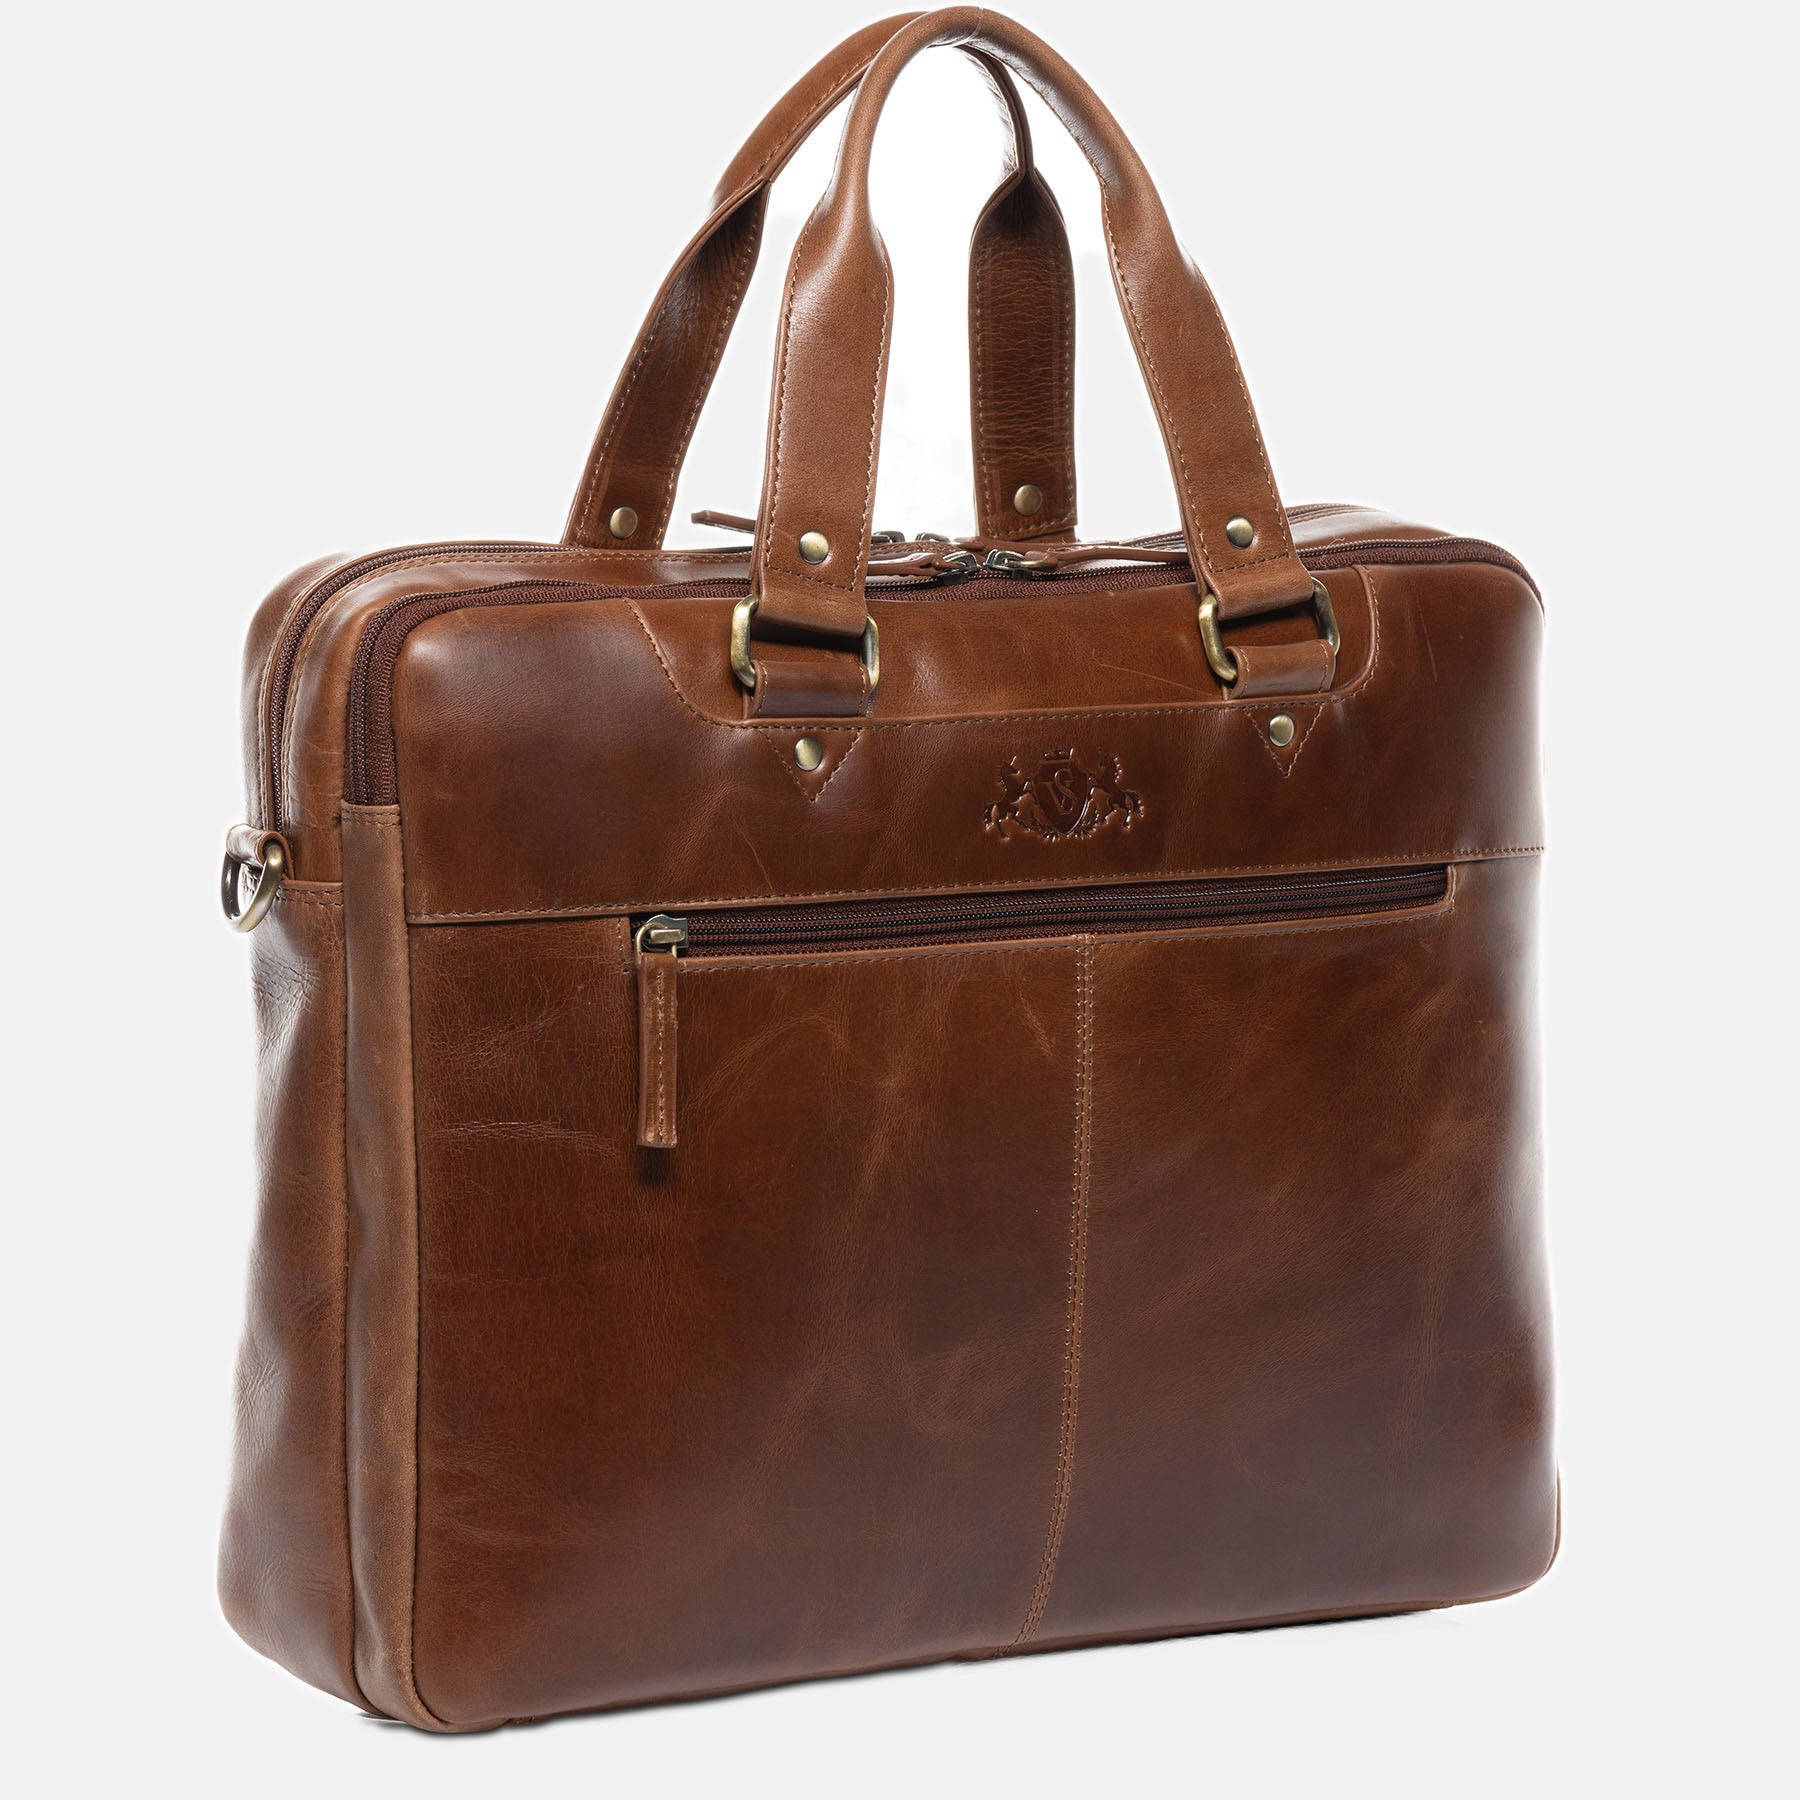 Laptop bag YANN natural leather brown